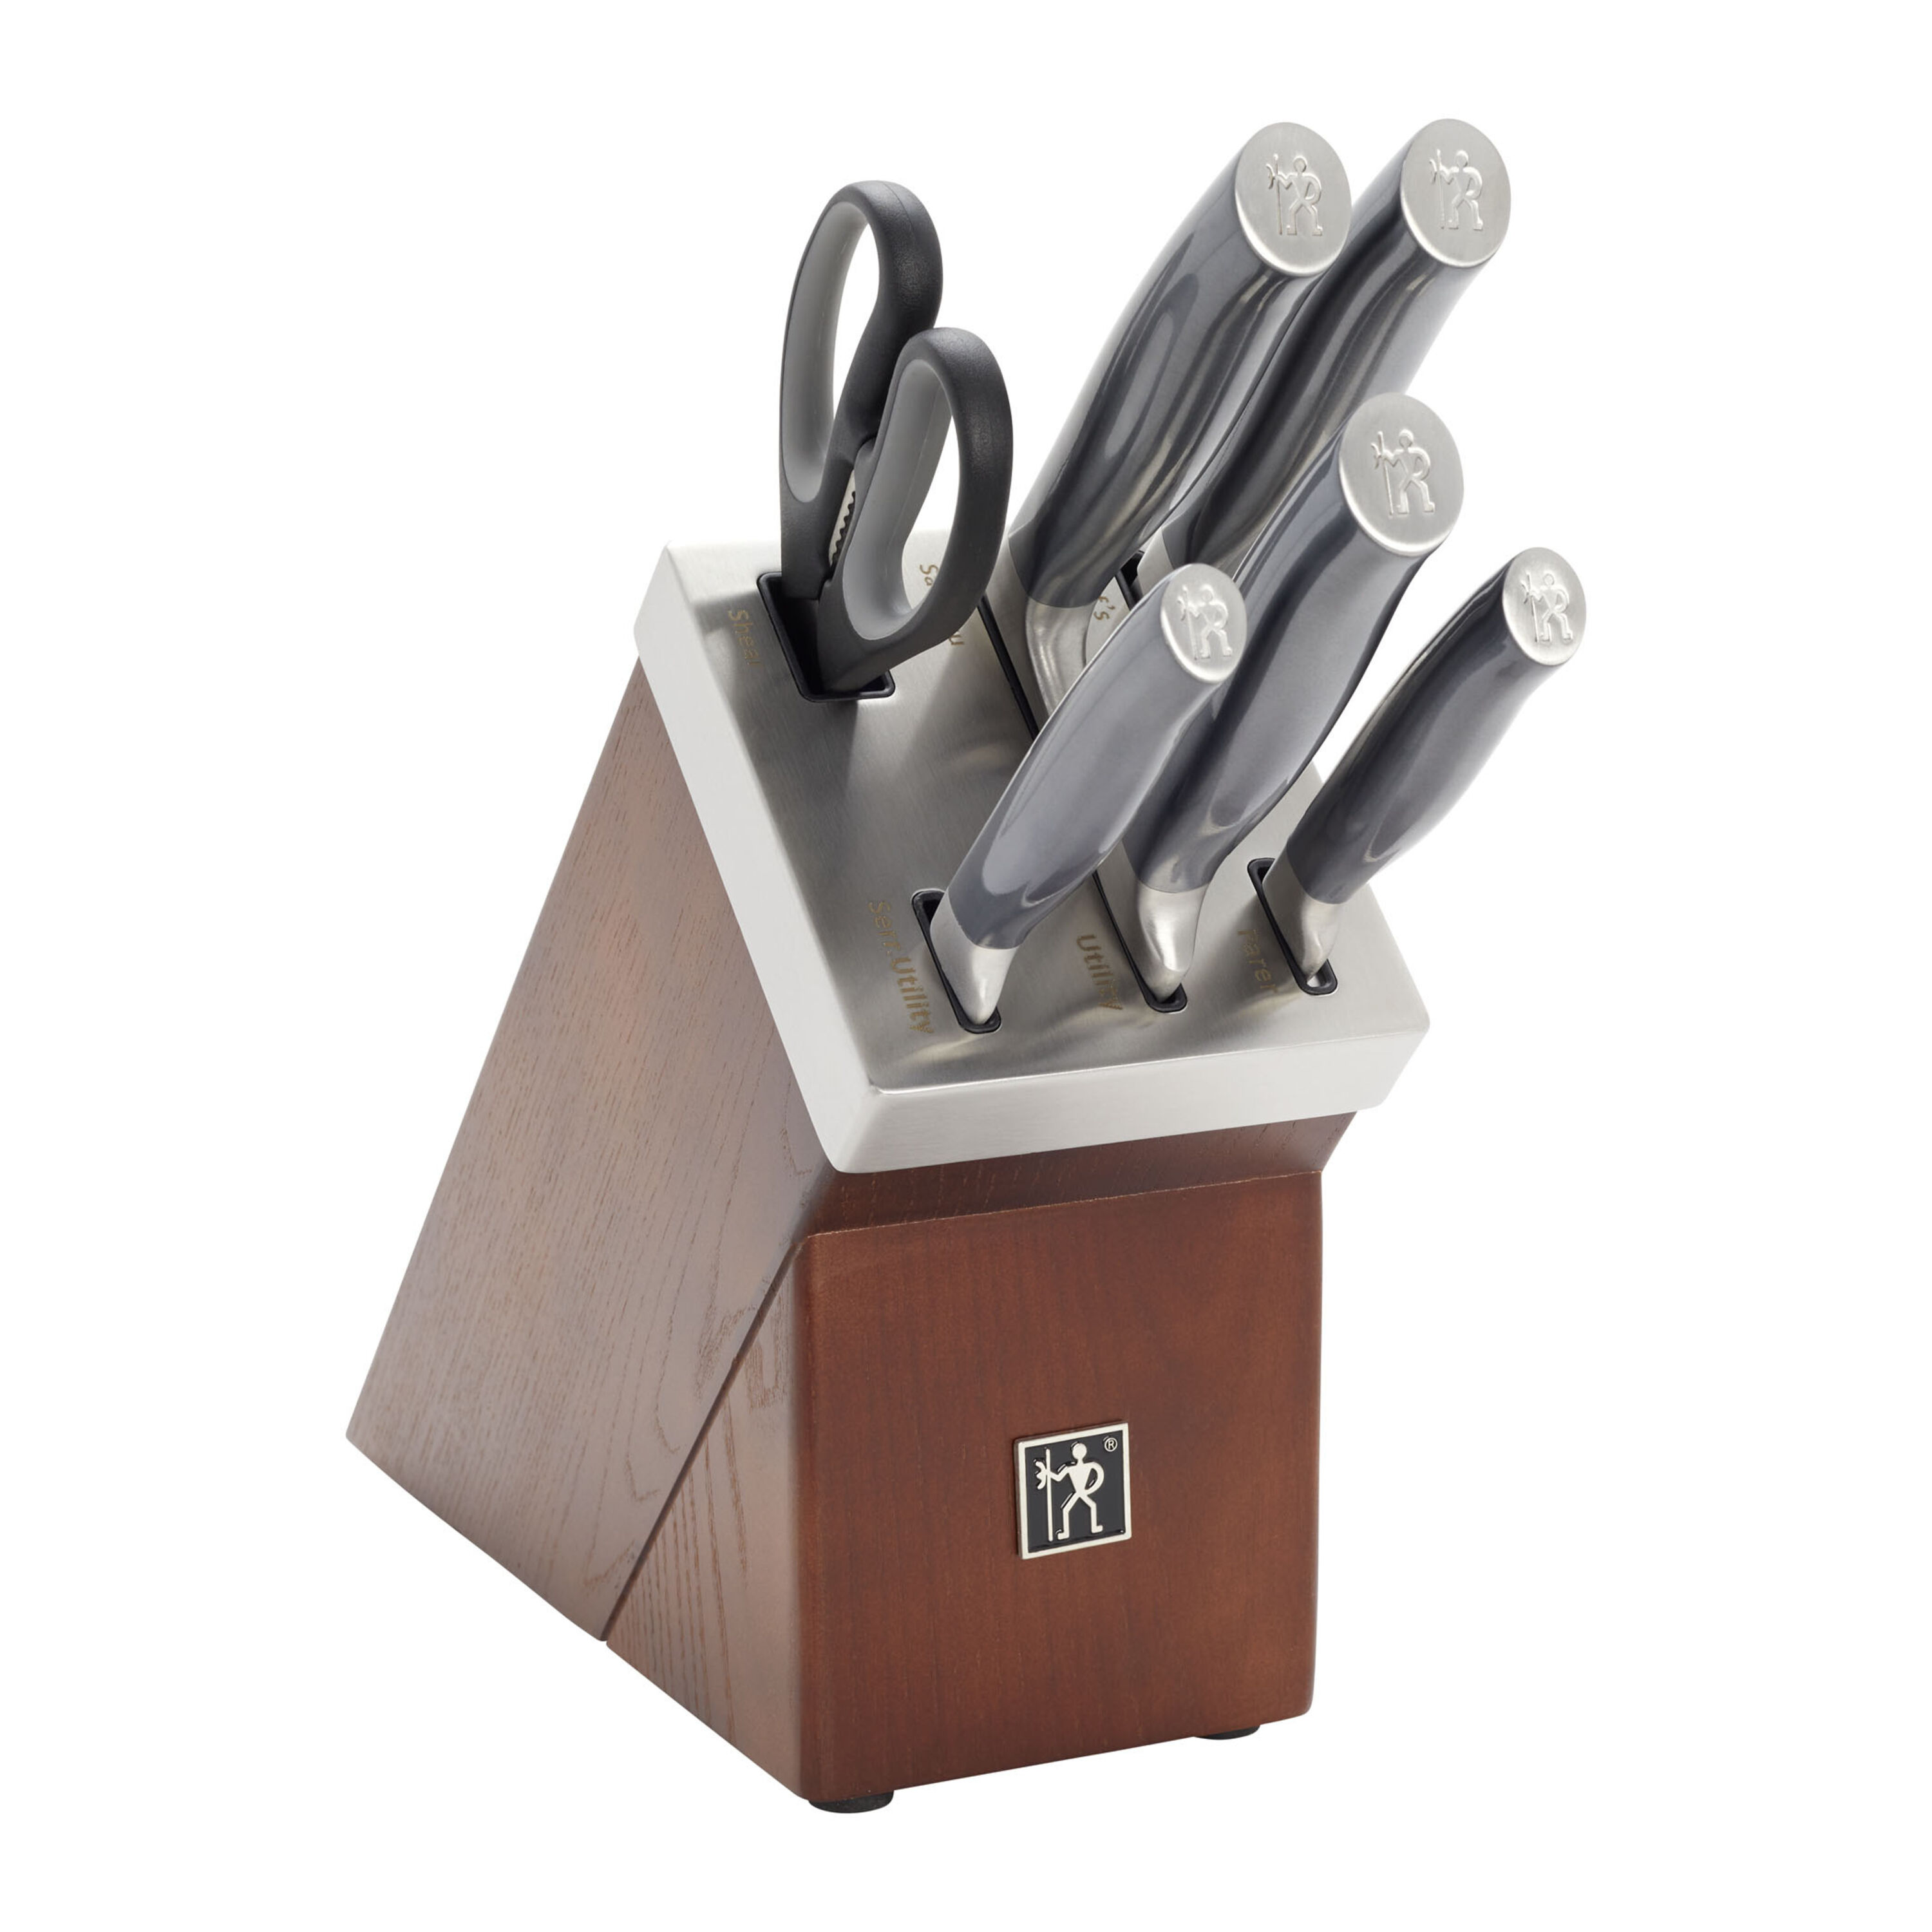 Henckels Solution 20-pc Self-Sharpening Knife Block Set 